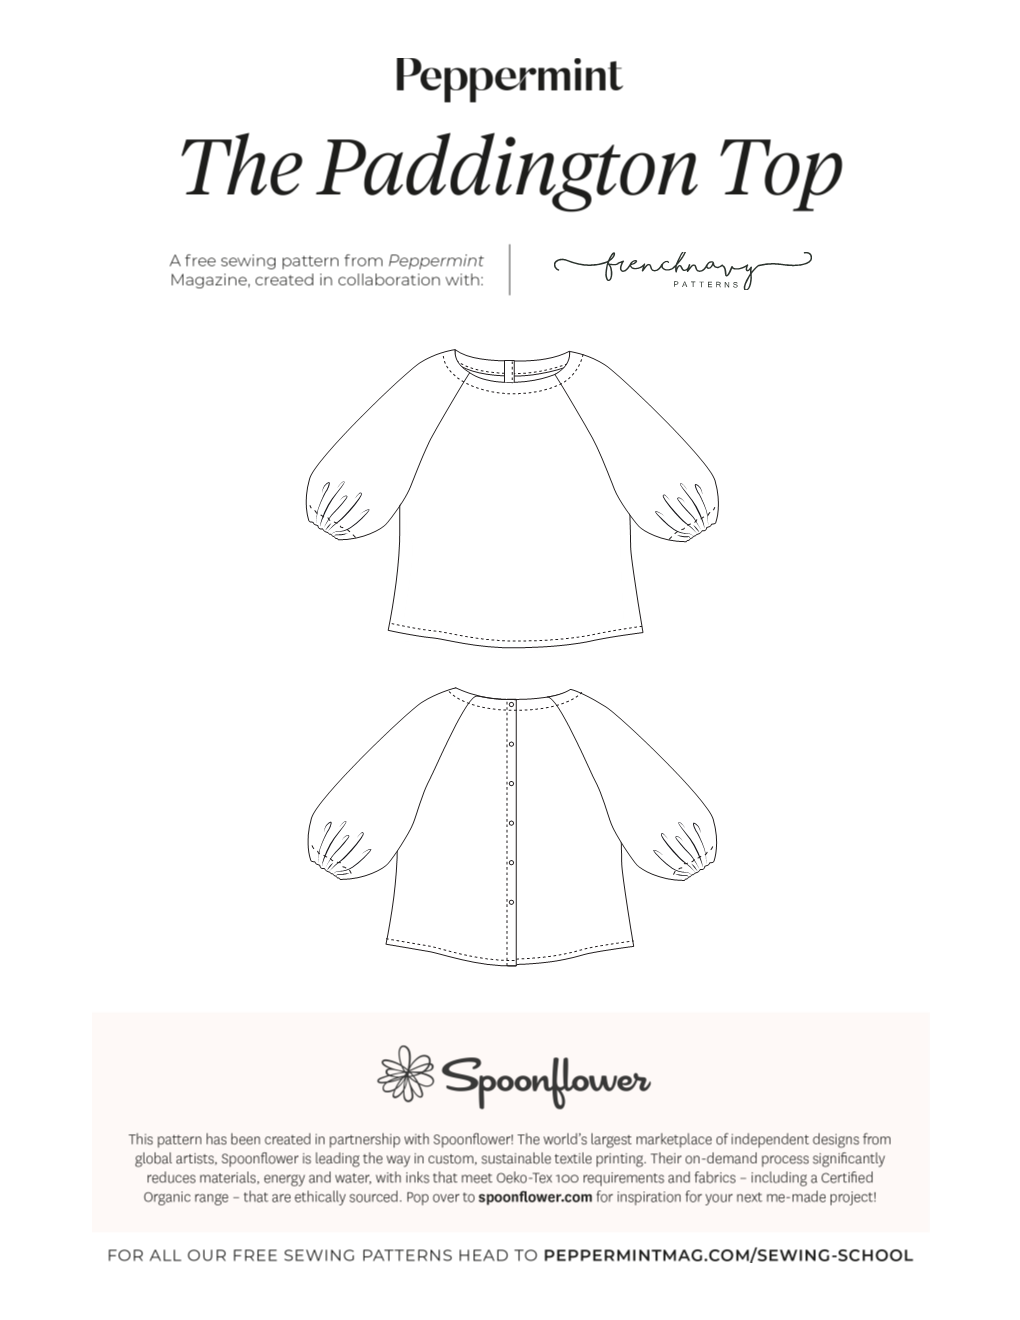 Paddington-Top-Instructions.Pdf